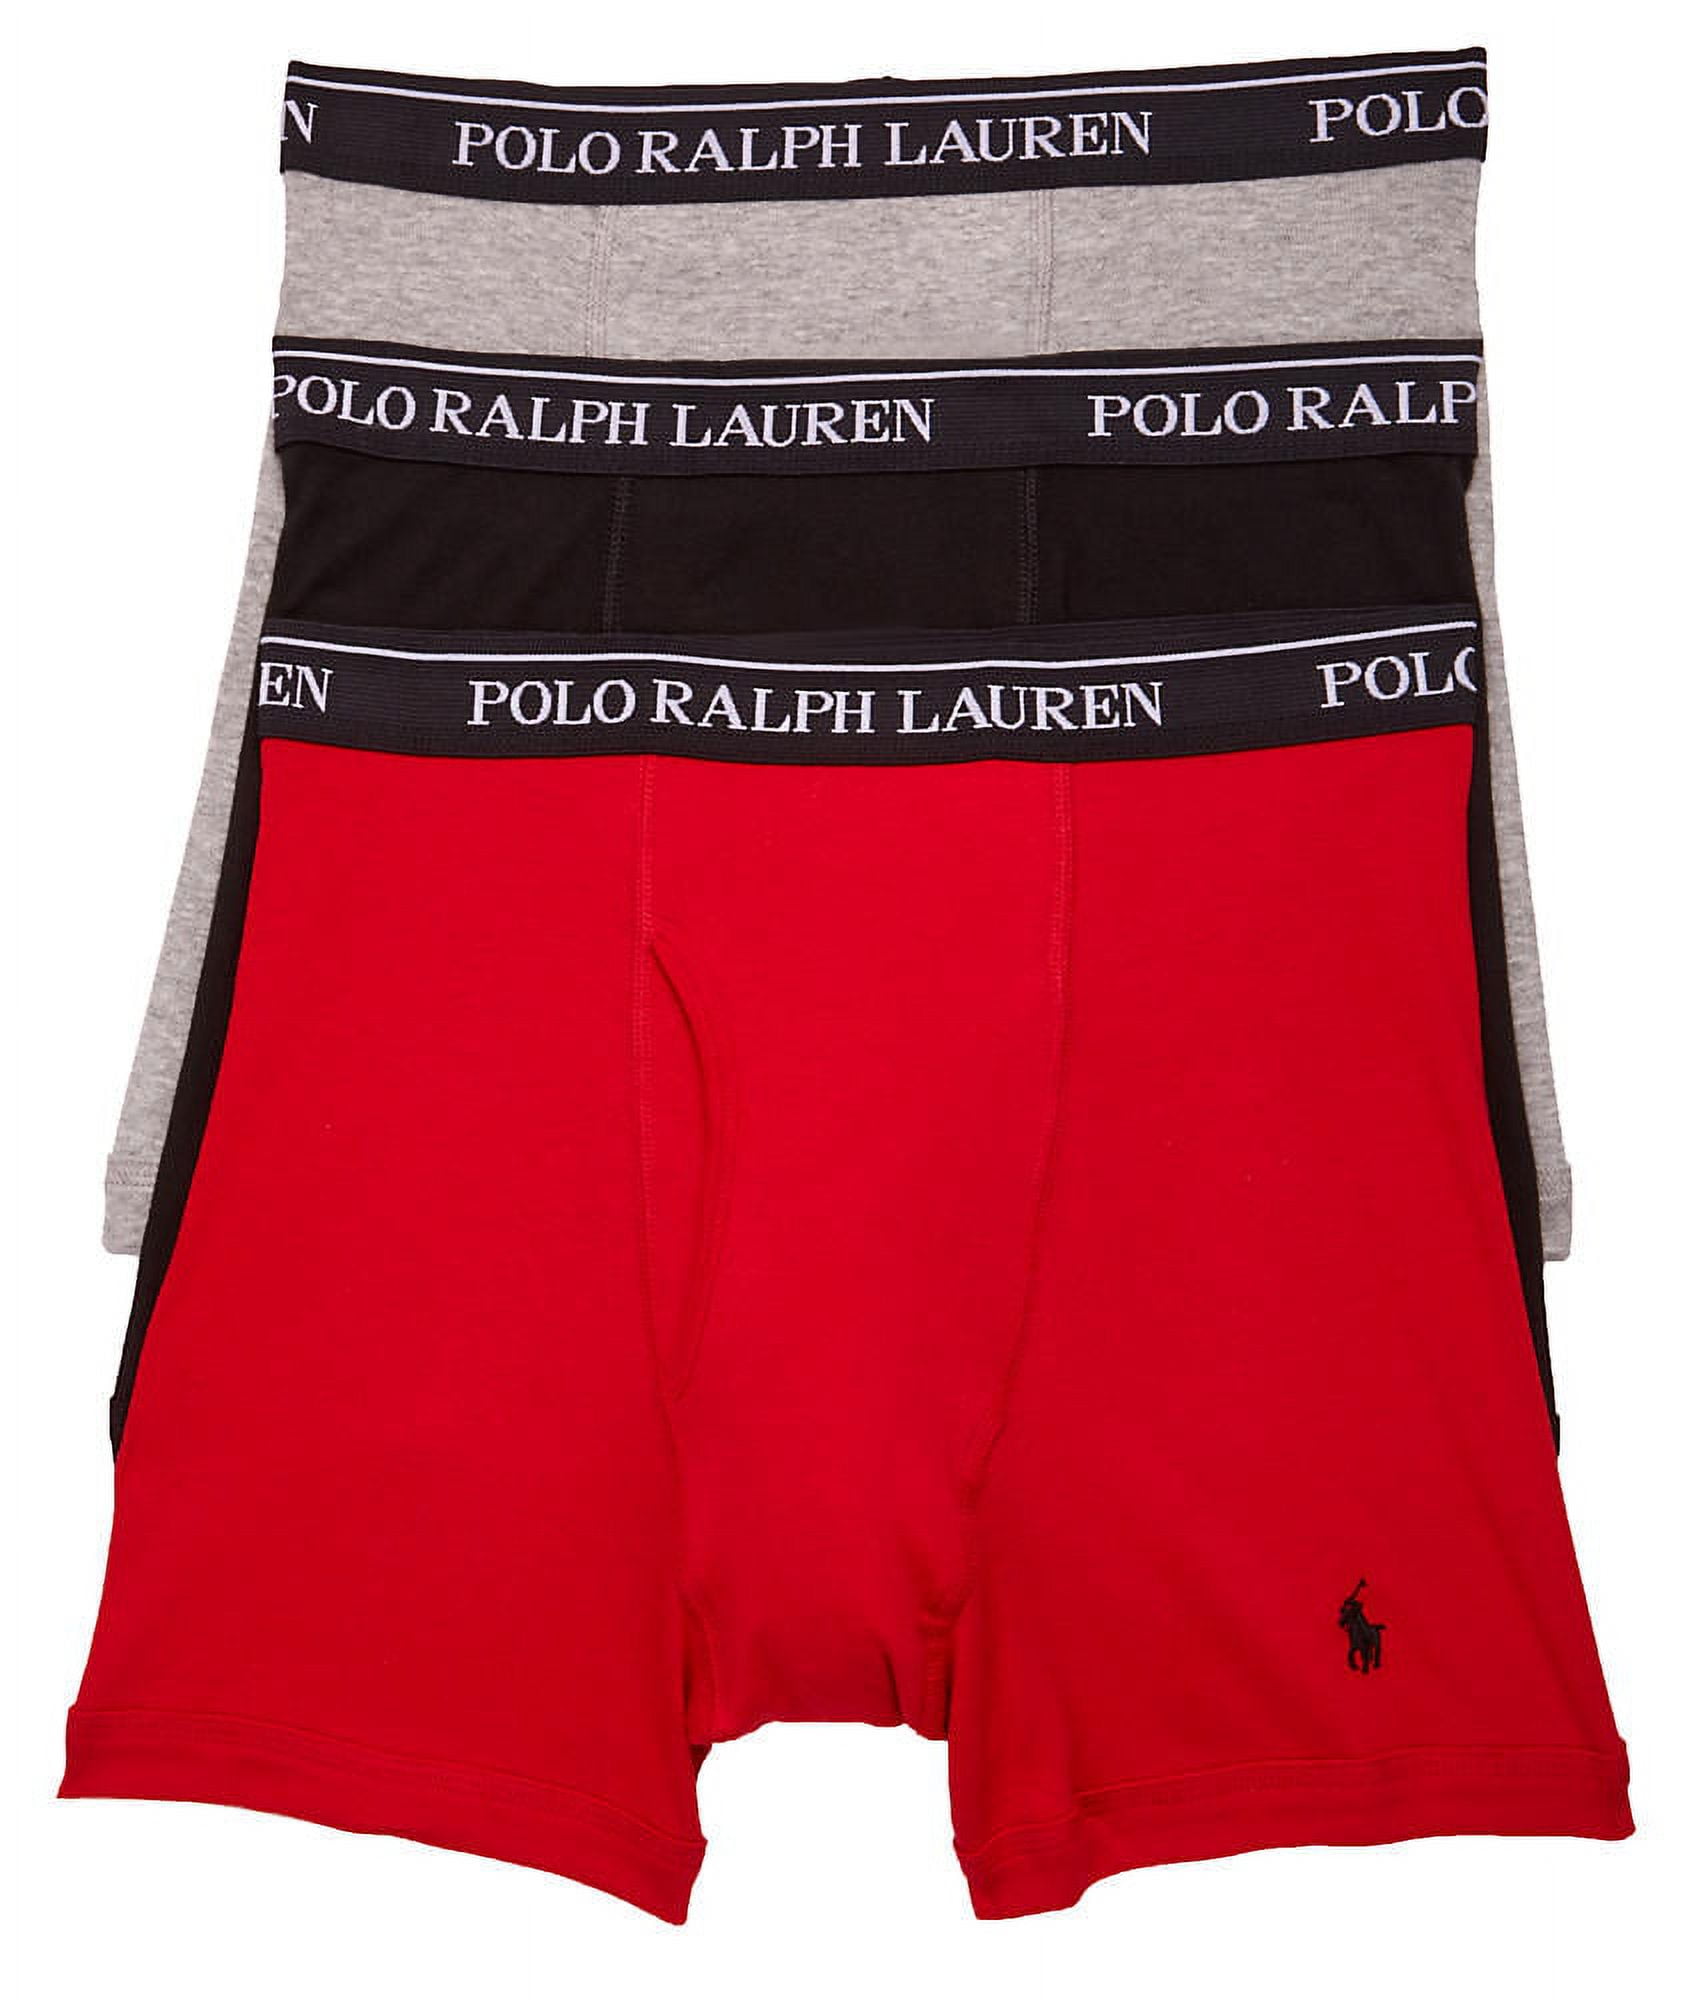 Polo Ralph Lauren Mens Classic Fit Cotton Boxer Brief 3-Pack Style